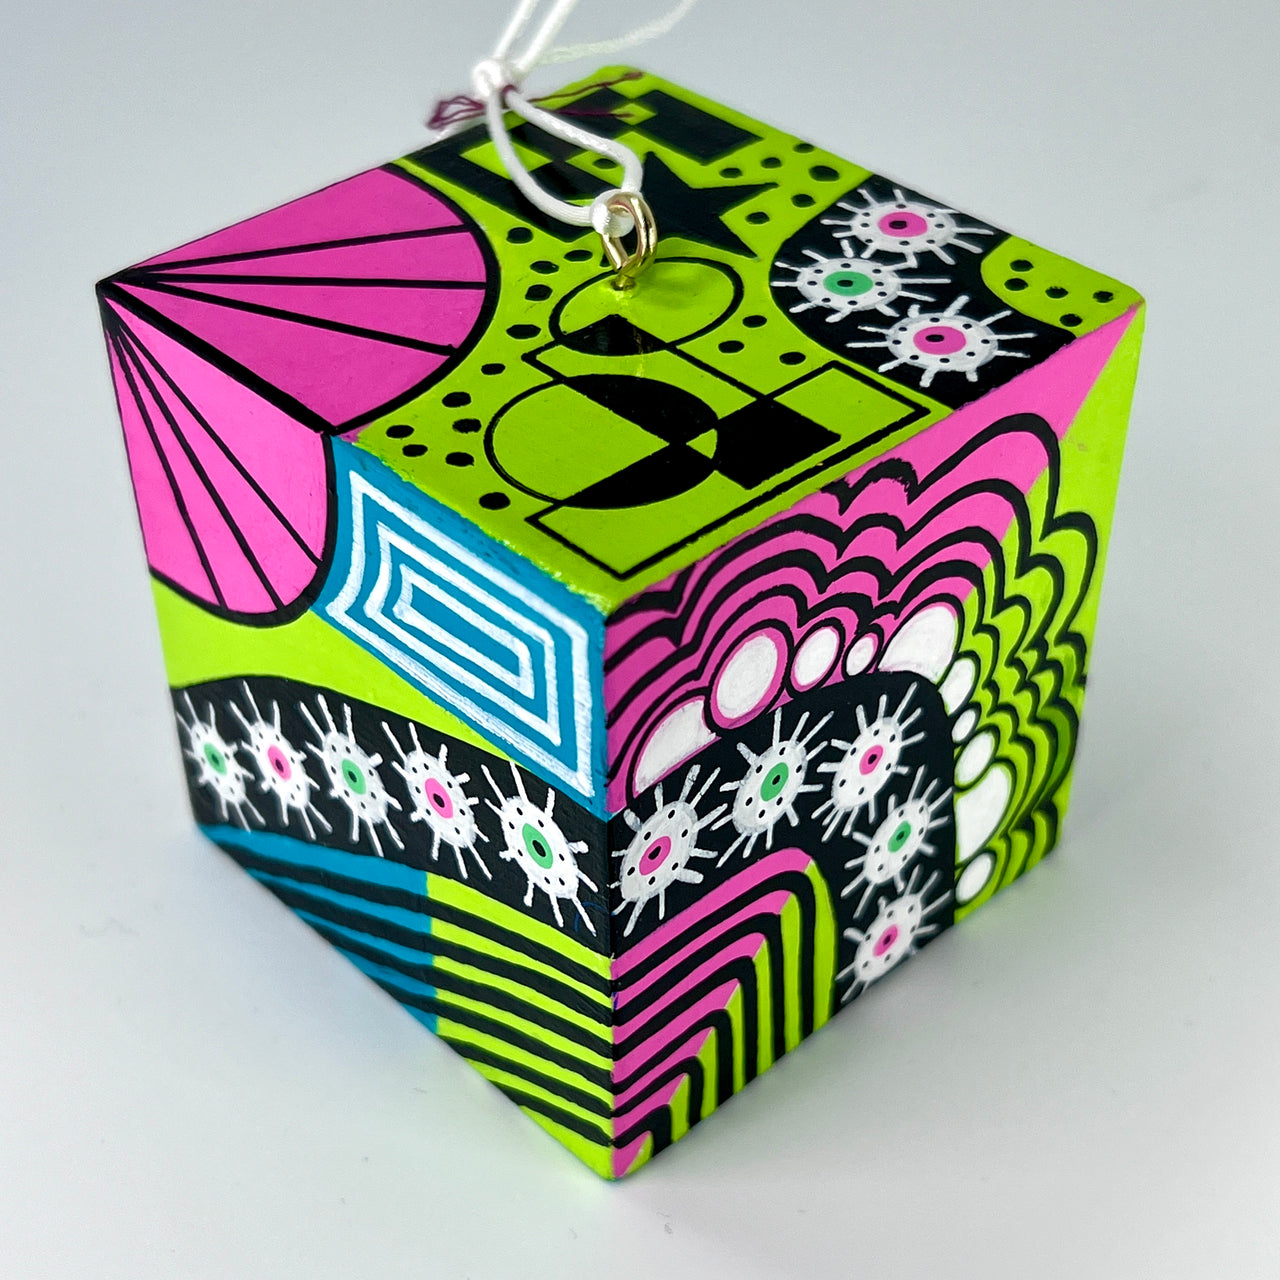 #19 - 3D Cube Art - 2.25" cube